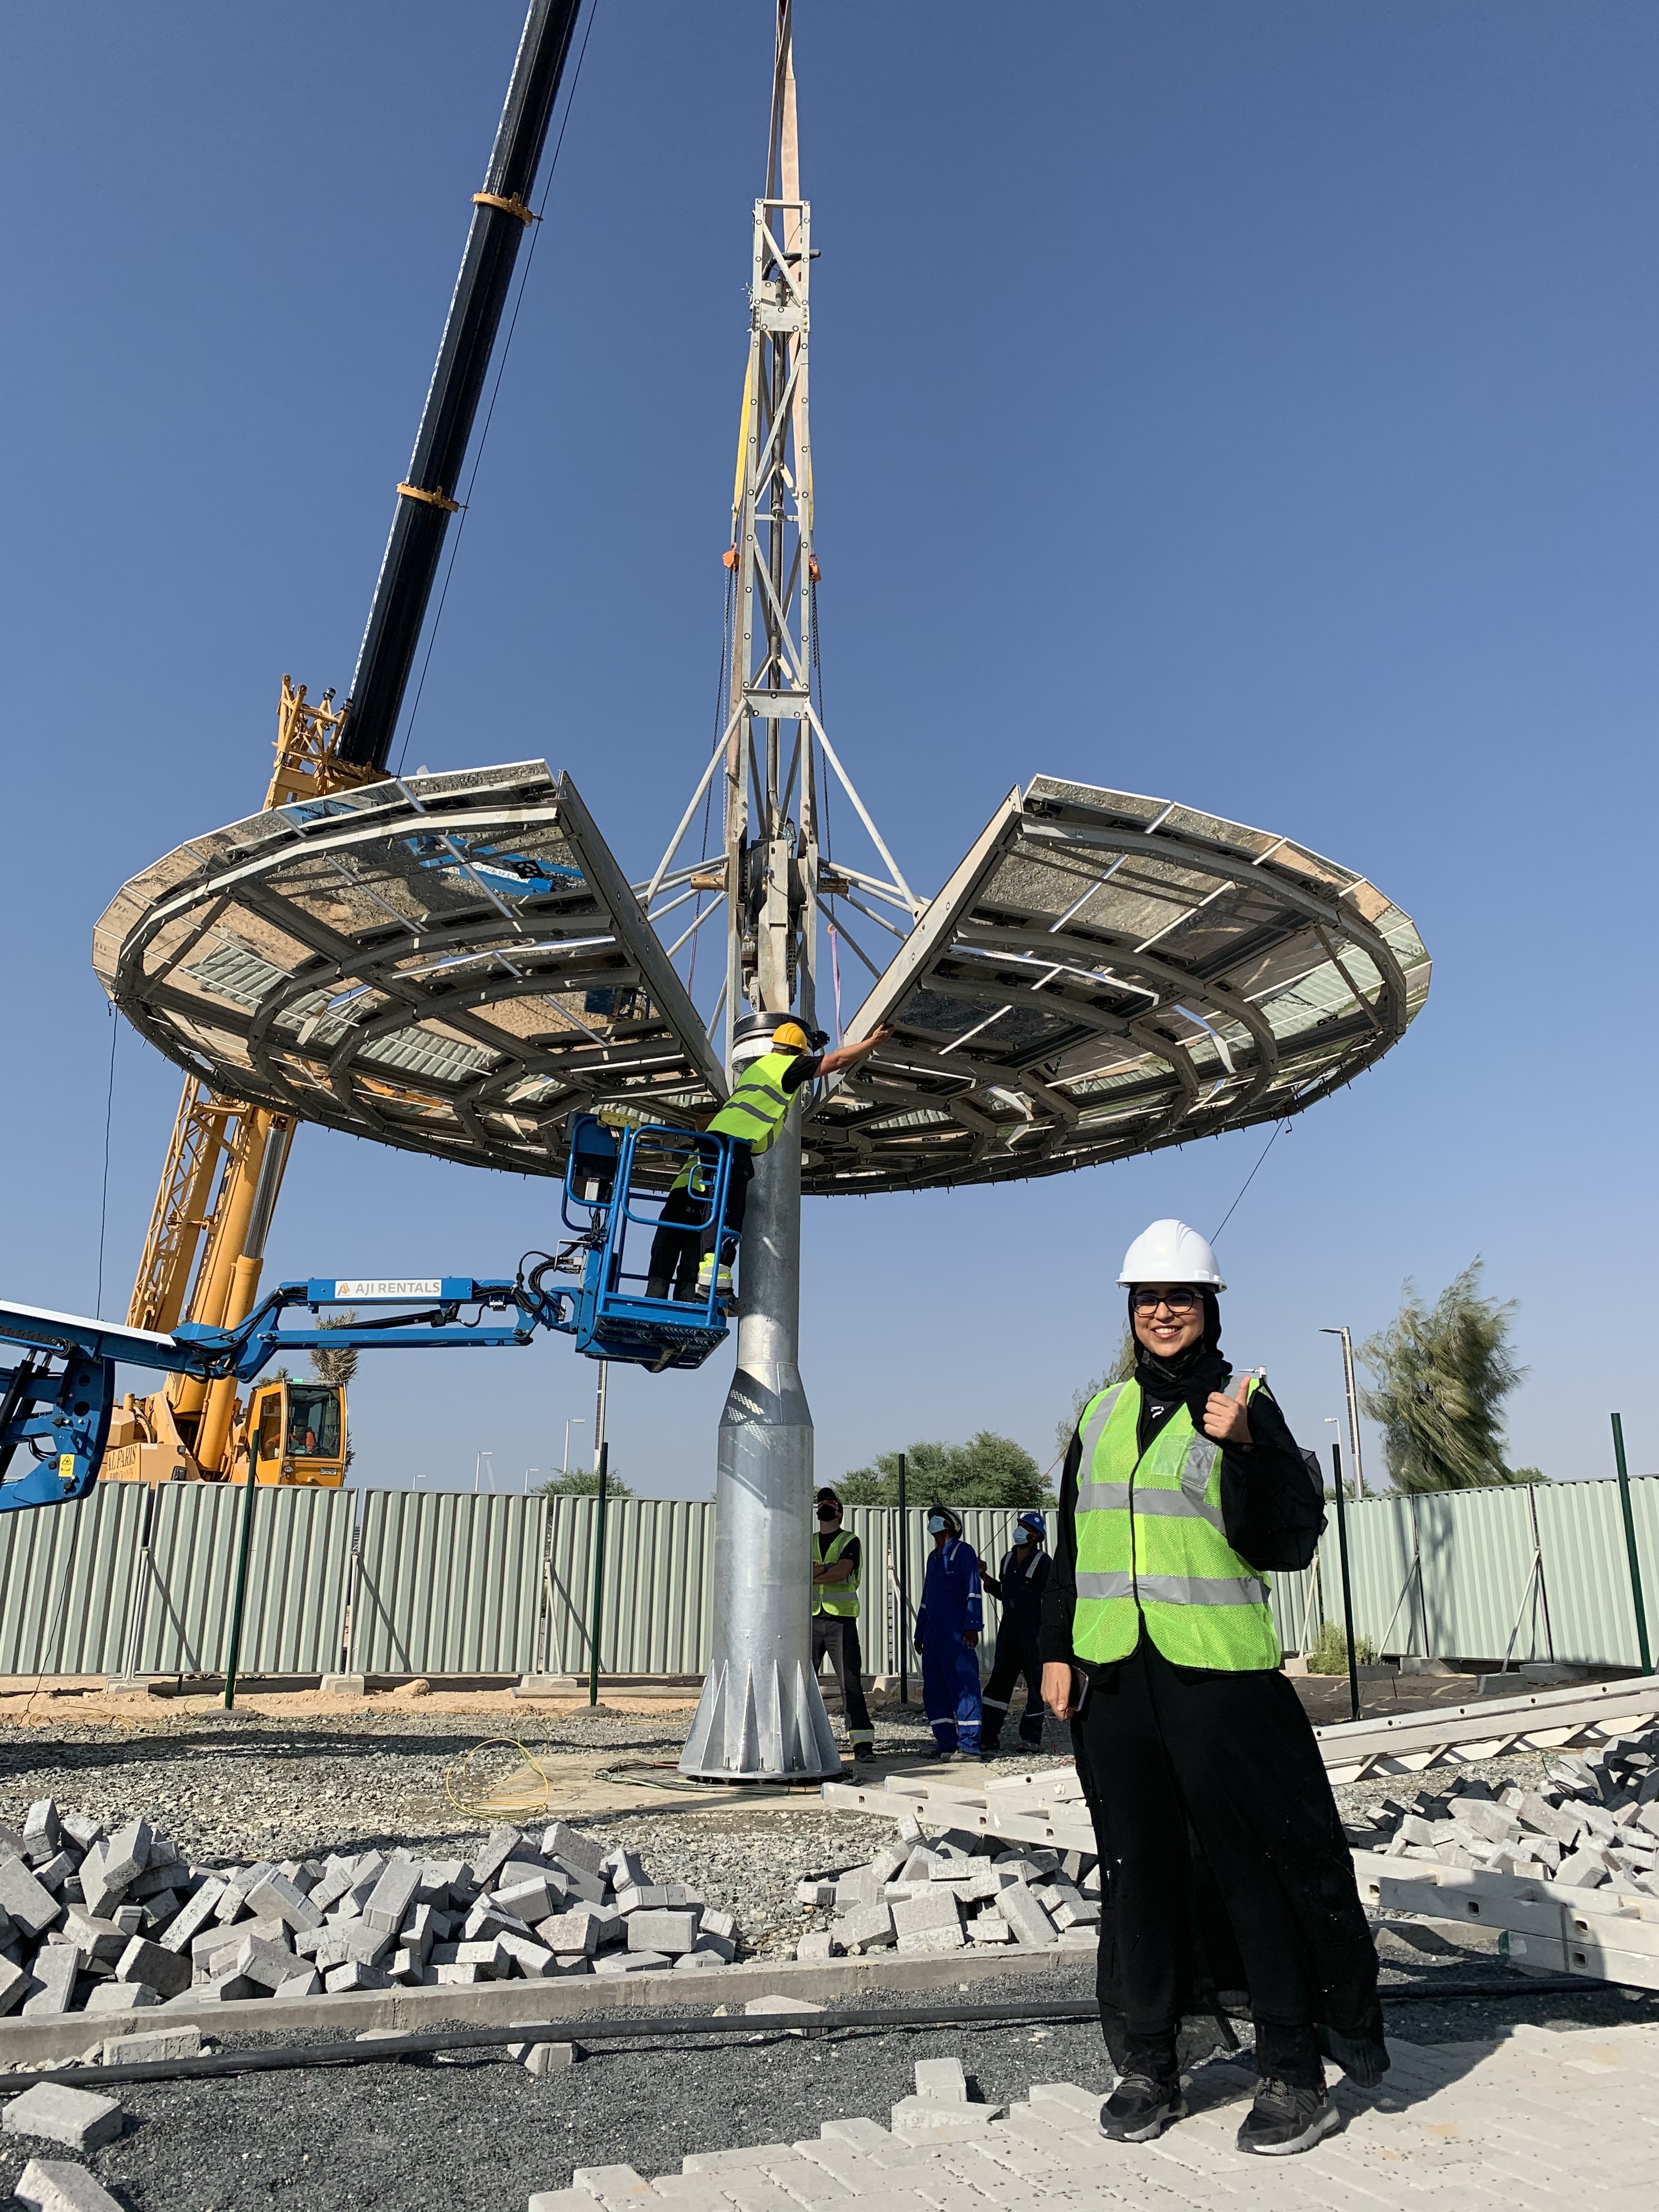 New Azelio Installation at Khalifa University’s Masdar Institute Solar Platform to Demonstrate Renewable Energy 24/7